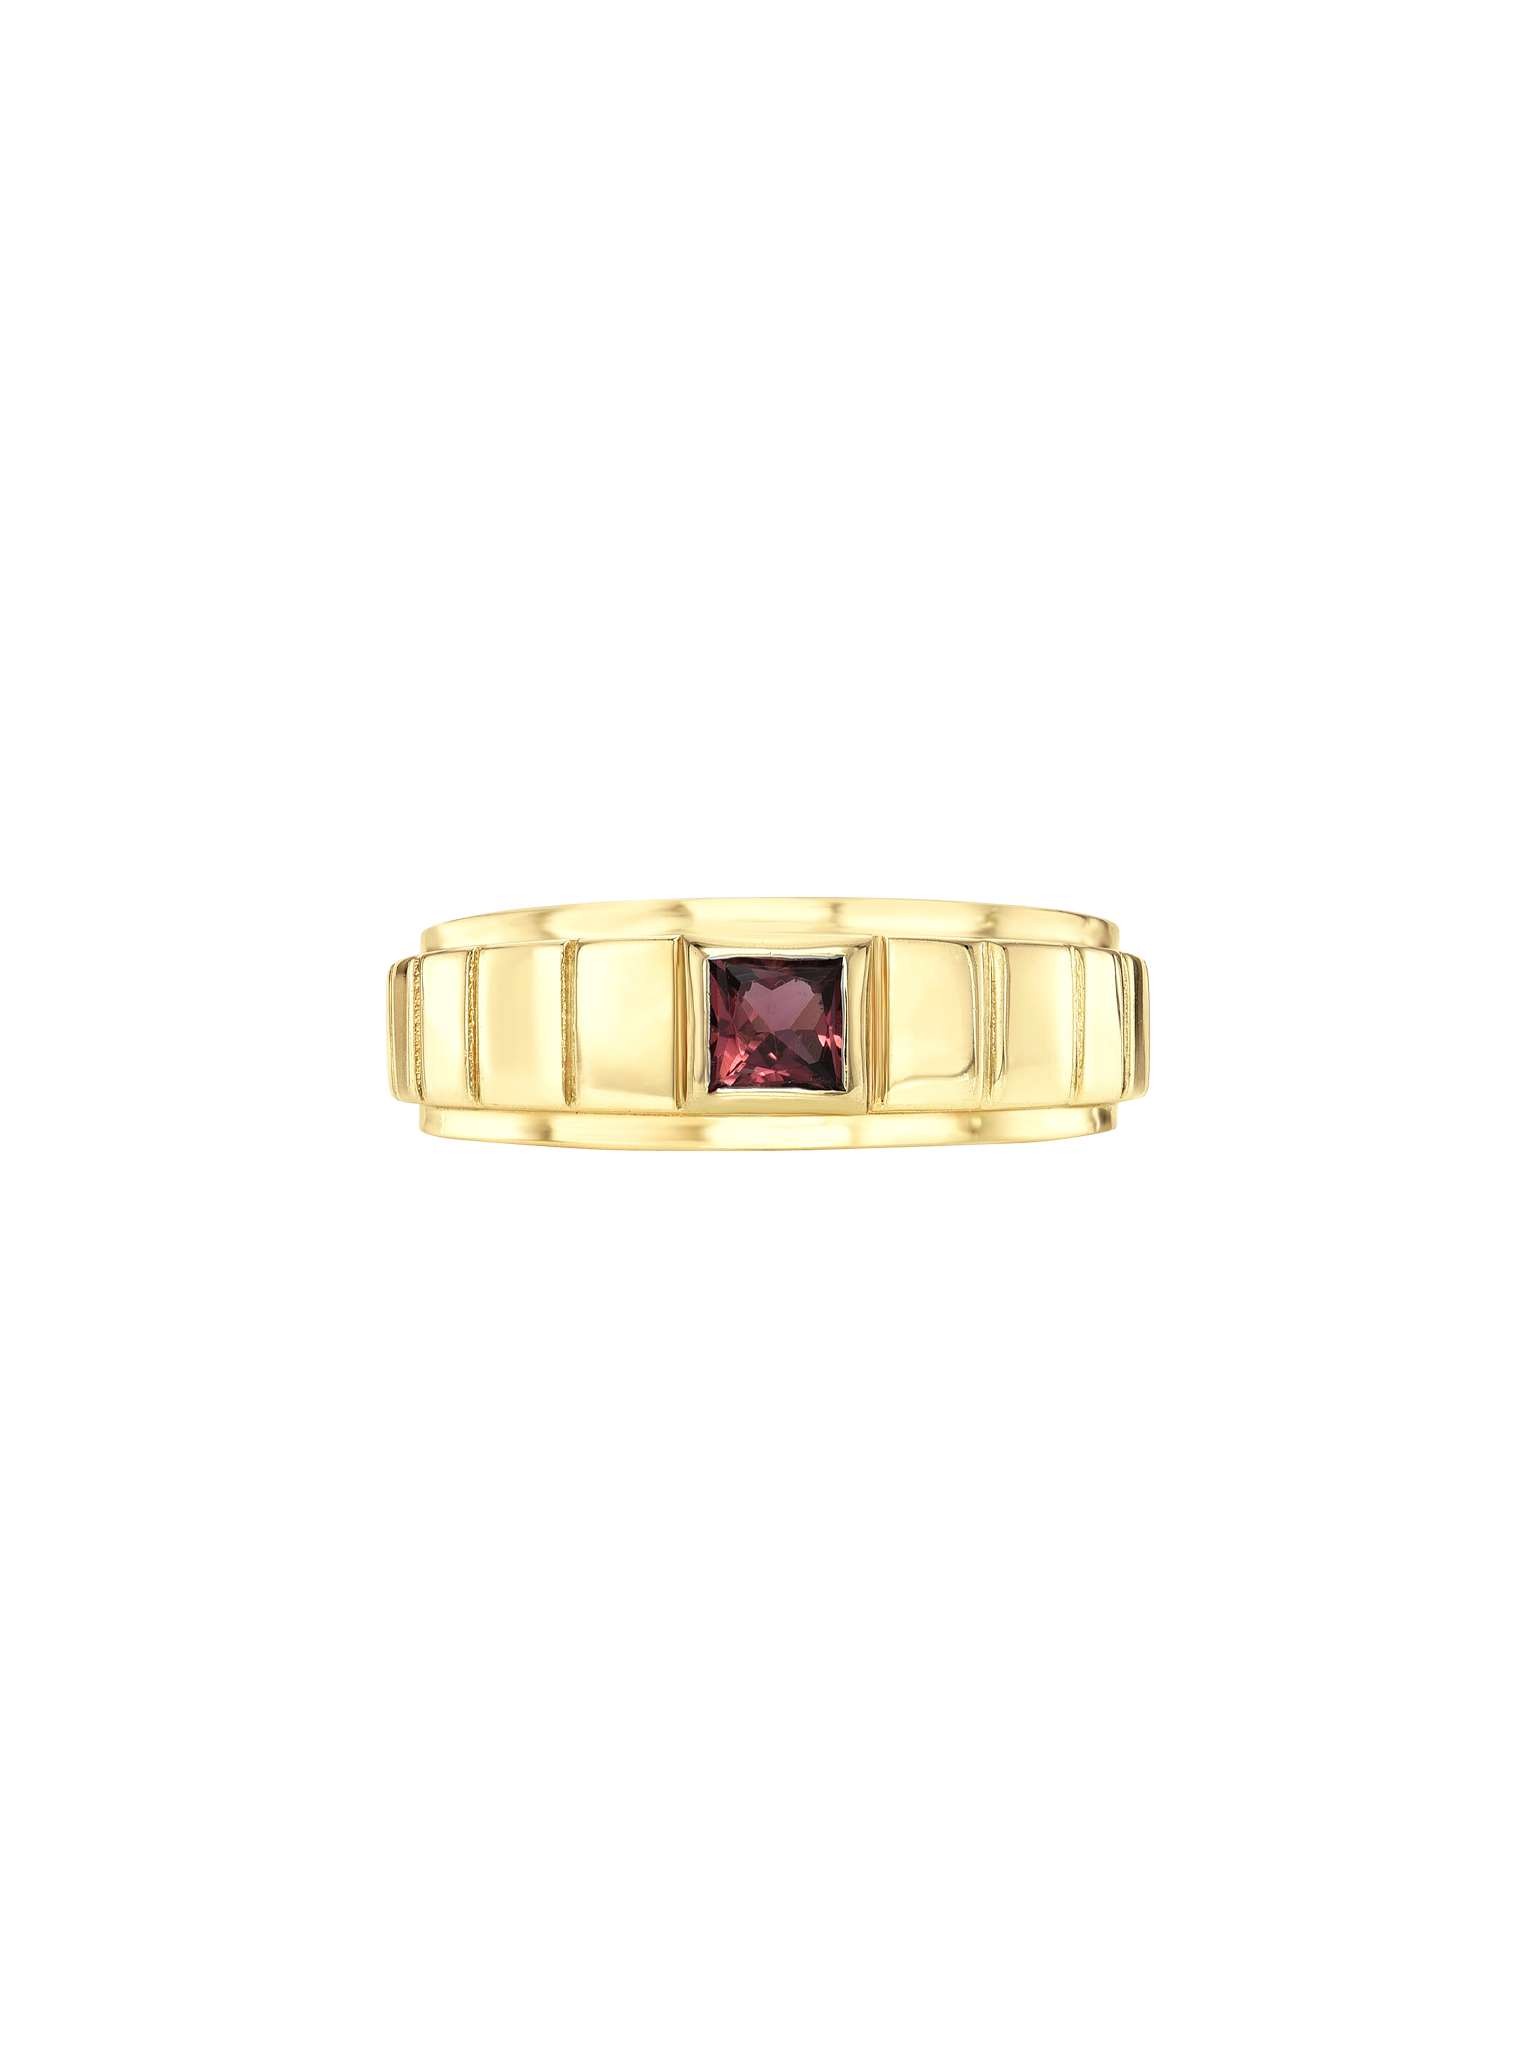 Rimon ring with pink tourmaline